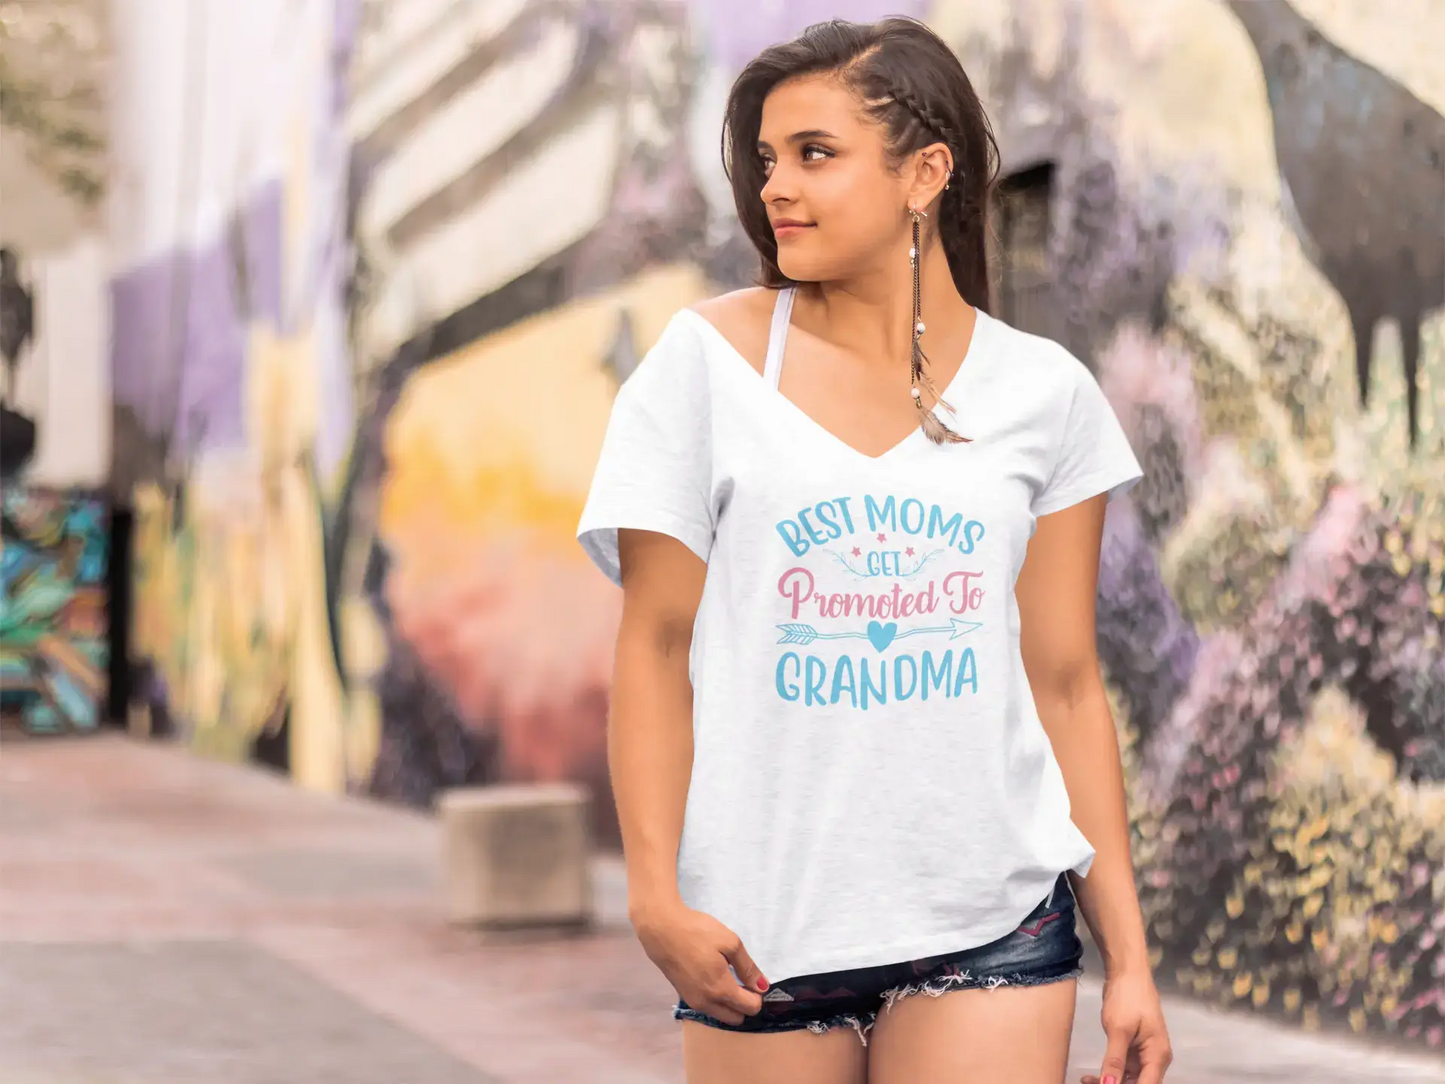 ULTRABASIC Women's T-Shirt Best Moms Get Promoted to Grandma - Short Sleeve Tee Shirt Tops